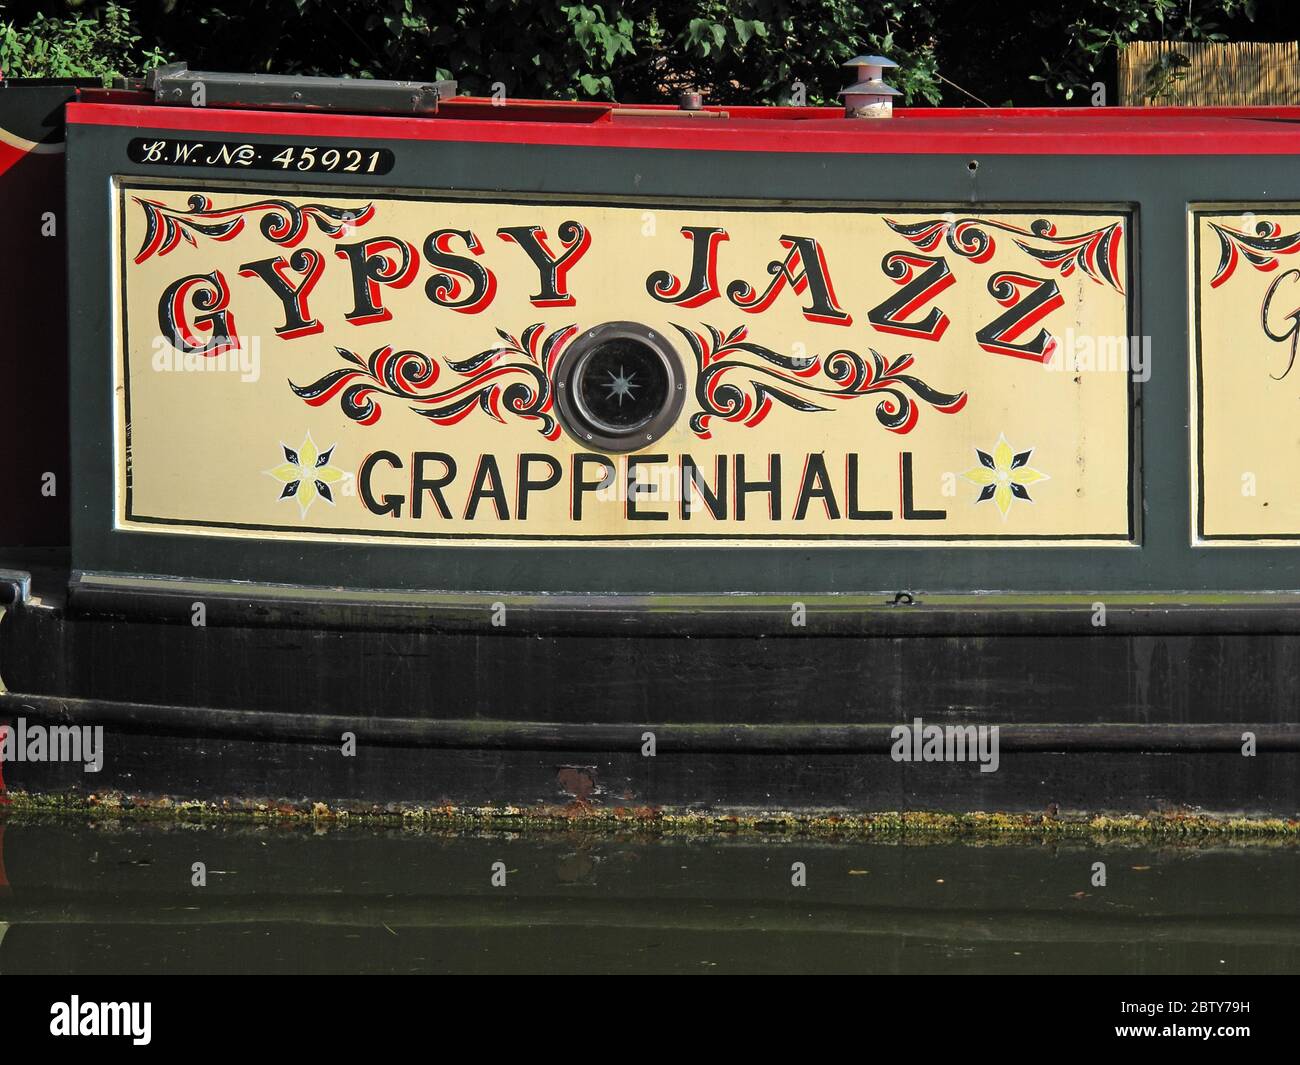 Gipsy jazz Grappenhall,Bridgewater Canal, Grappenhall, Warrington, Cheshire, noroeste,Inglaterra, Inglaterra, Reino Unido, 45921 Foto de stock